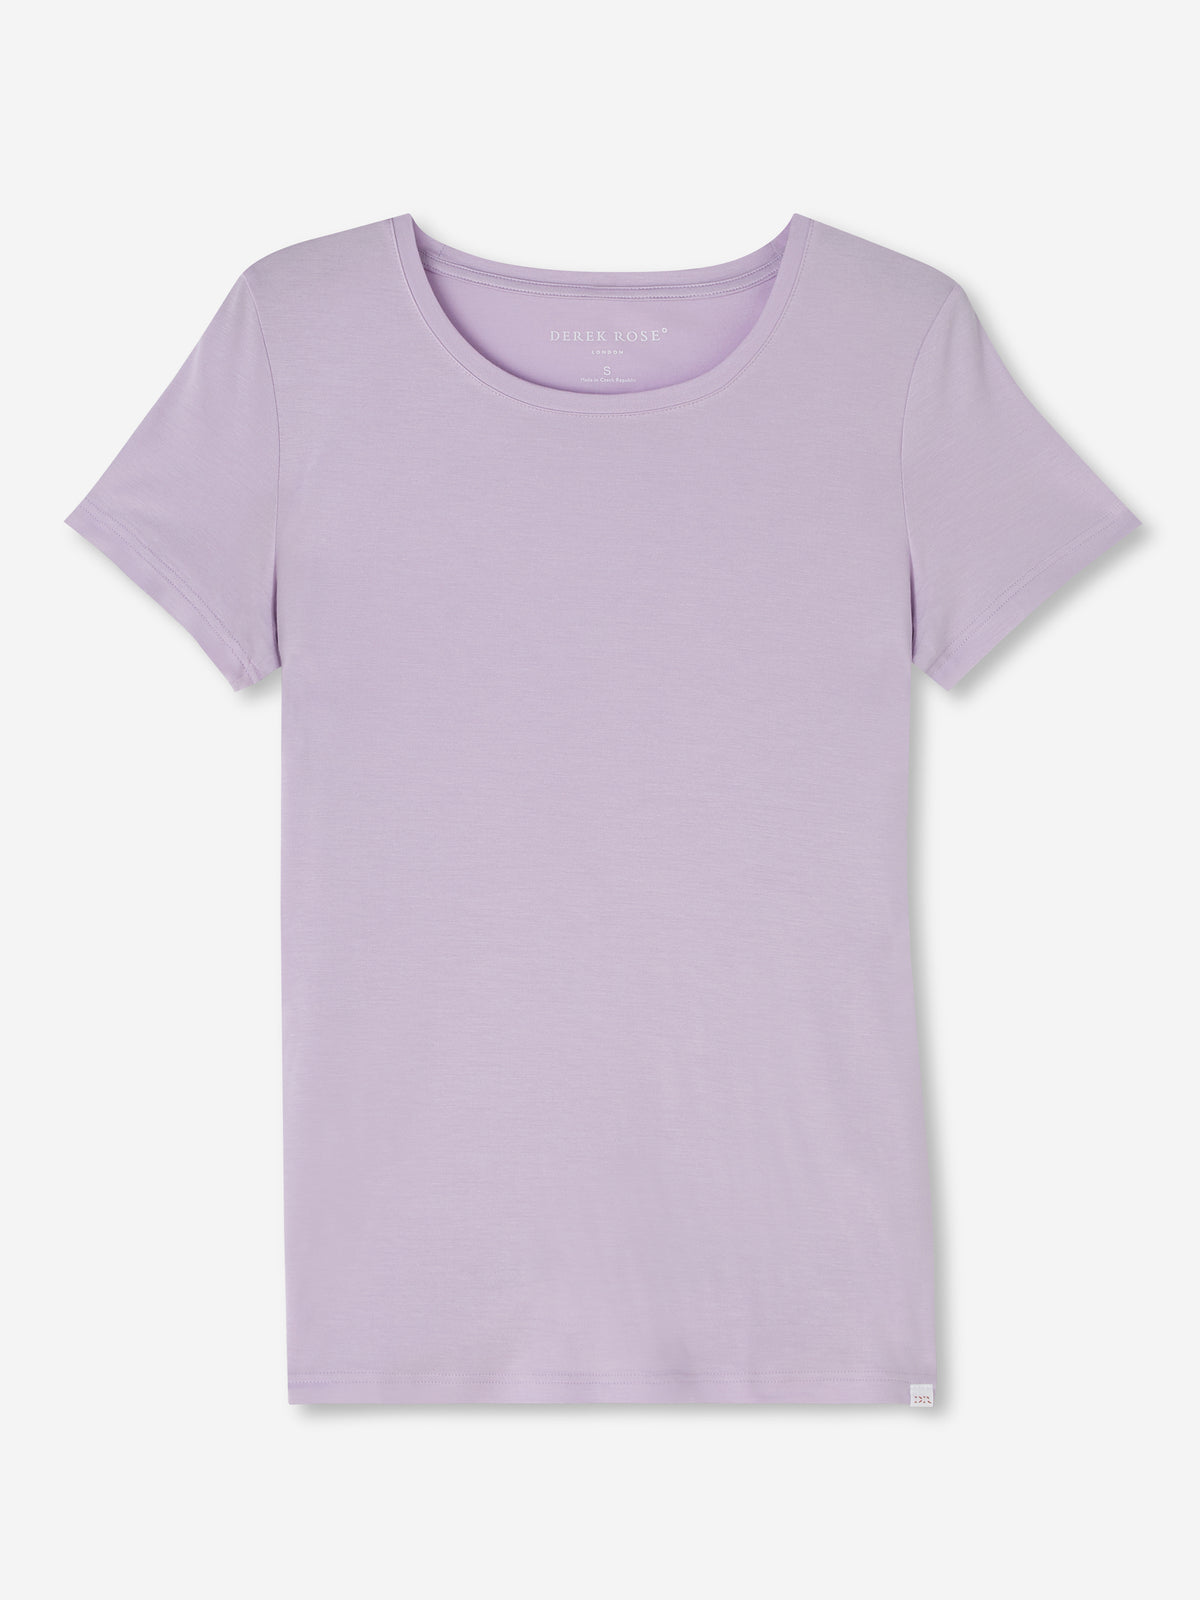 Women's T-Shirt Lara Micro Modal Stretch Lilac